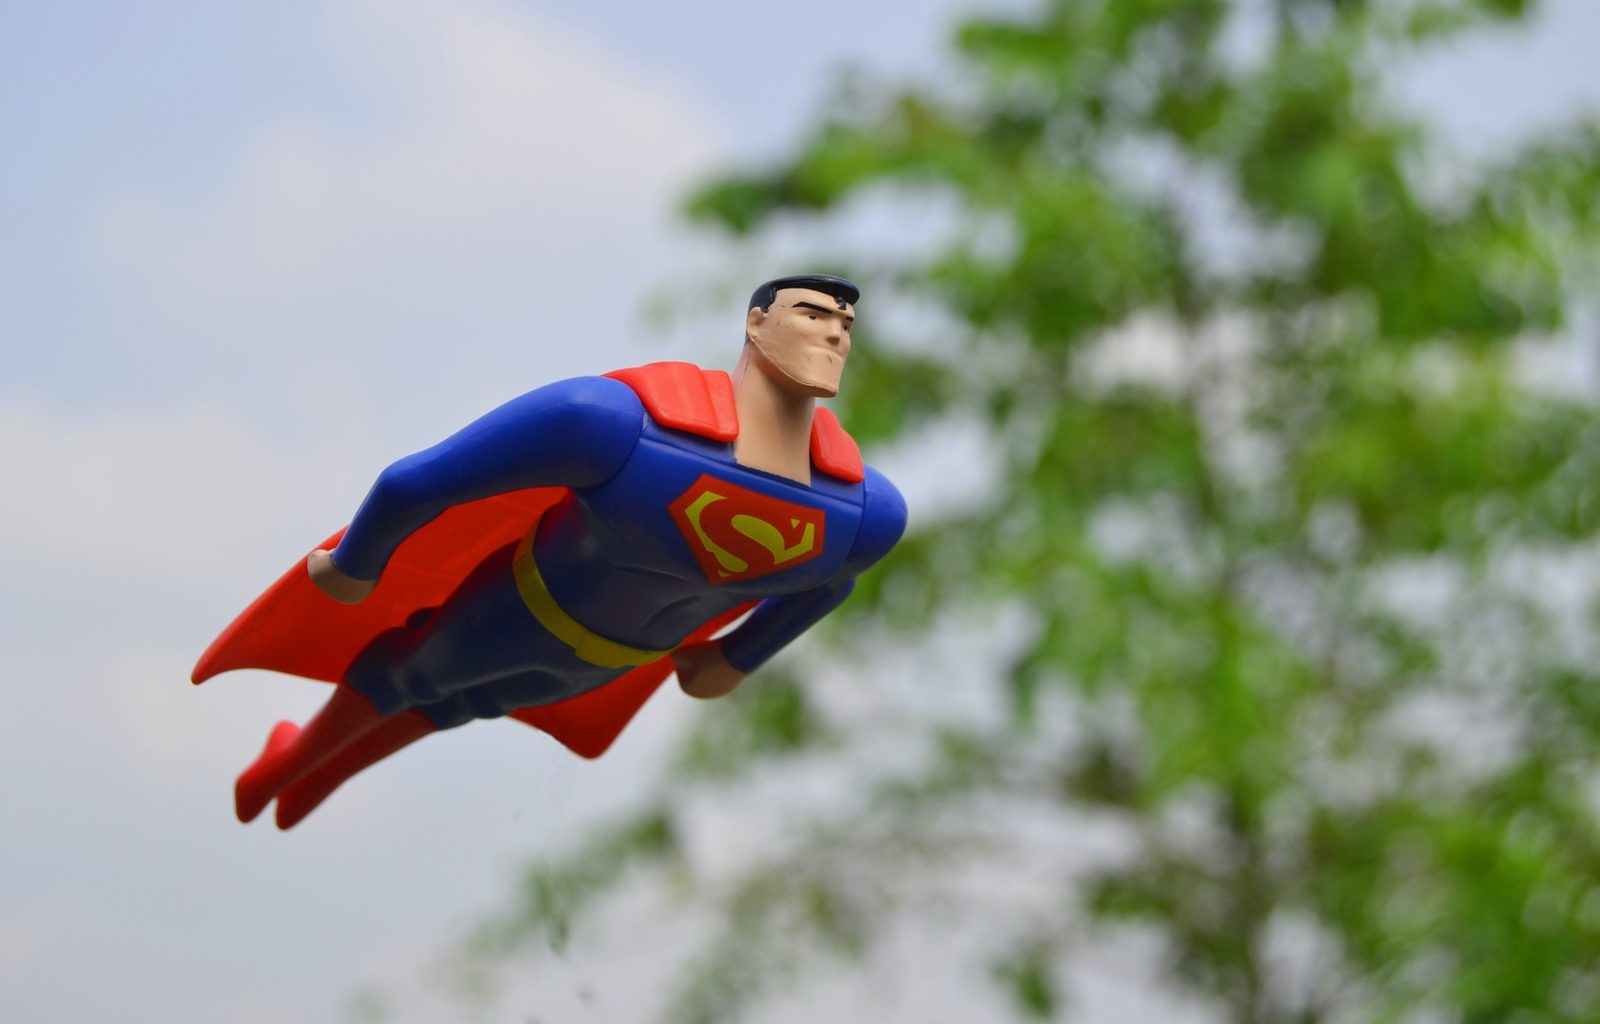 Superman flying near green grass